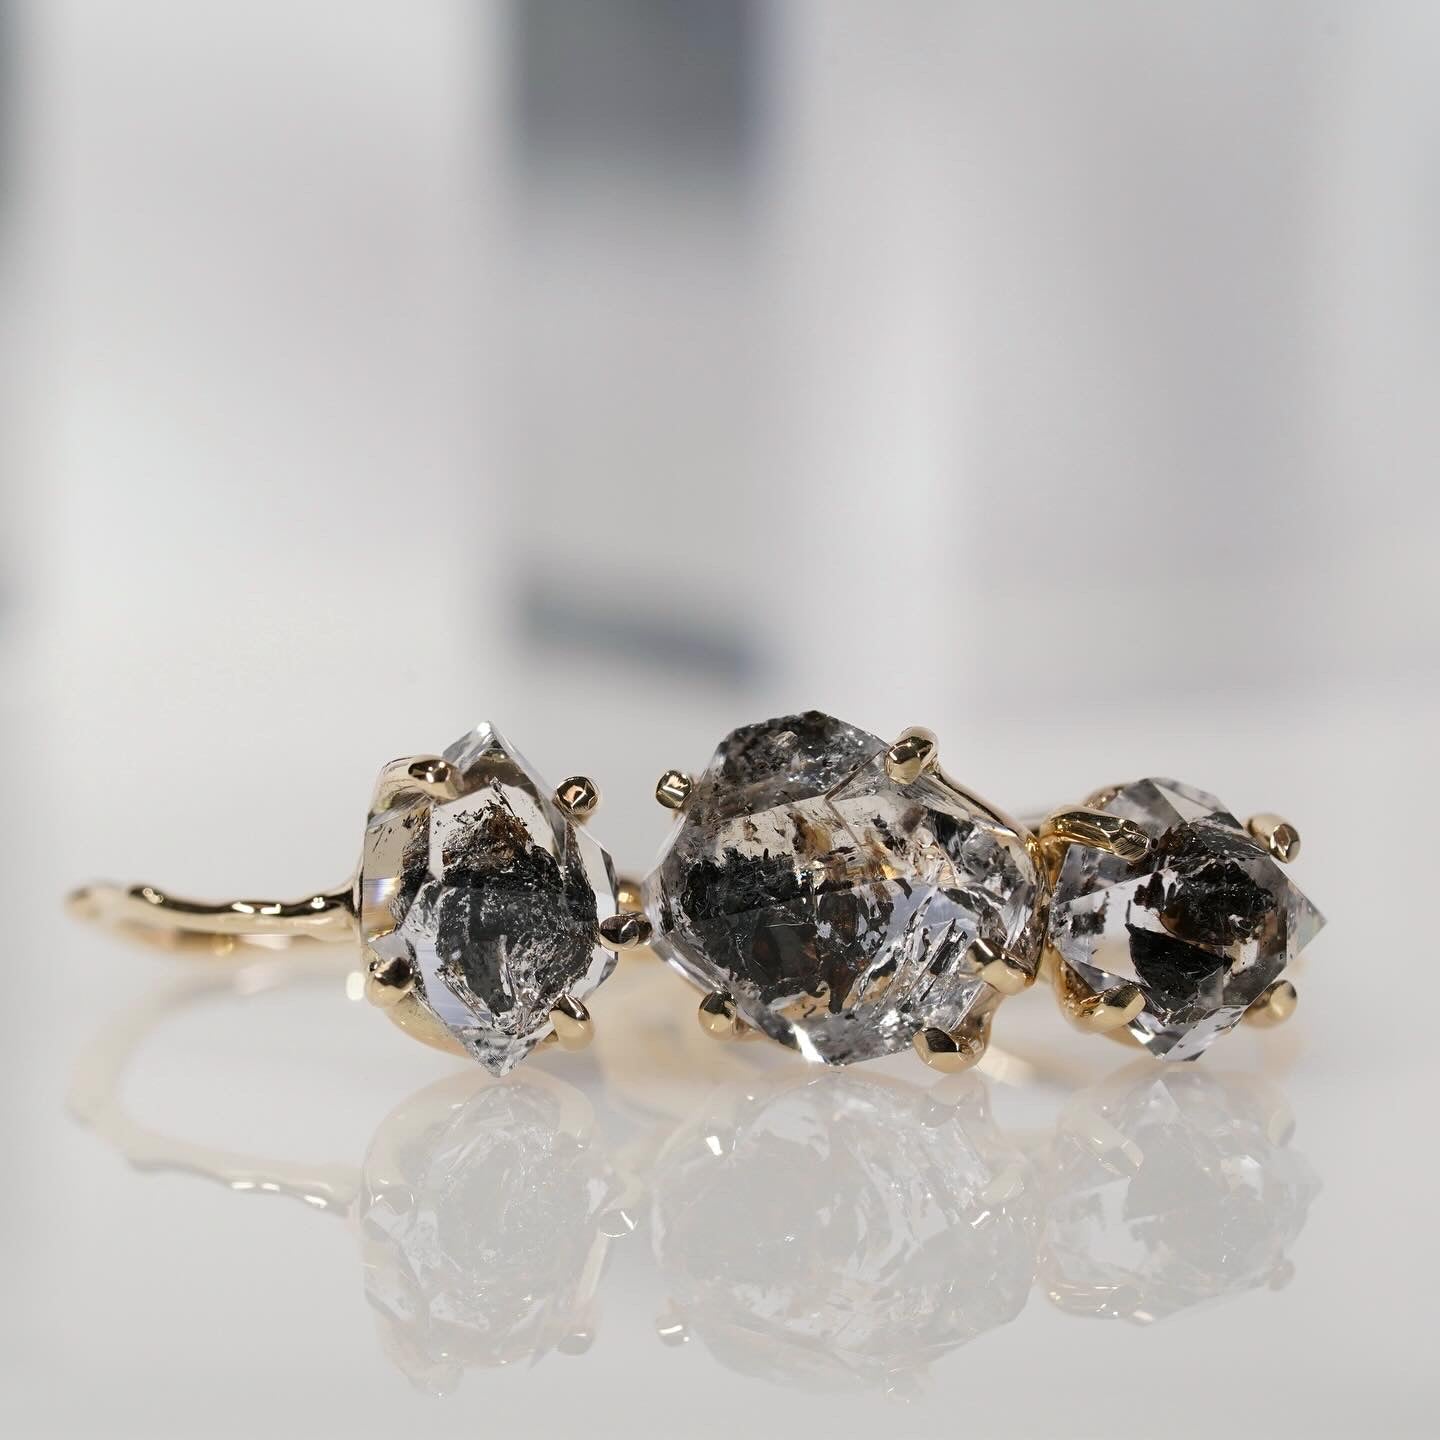 Charm Ring No.993/Herkimer Diamond